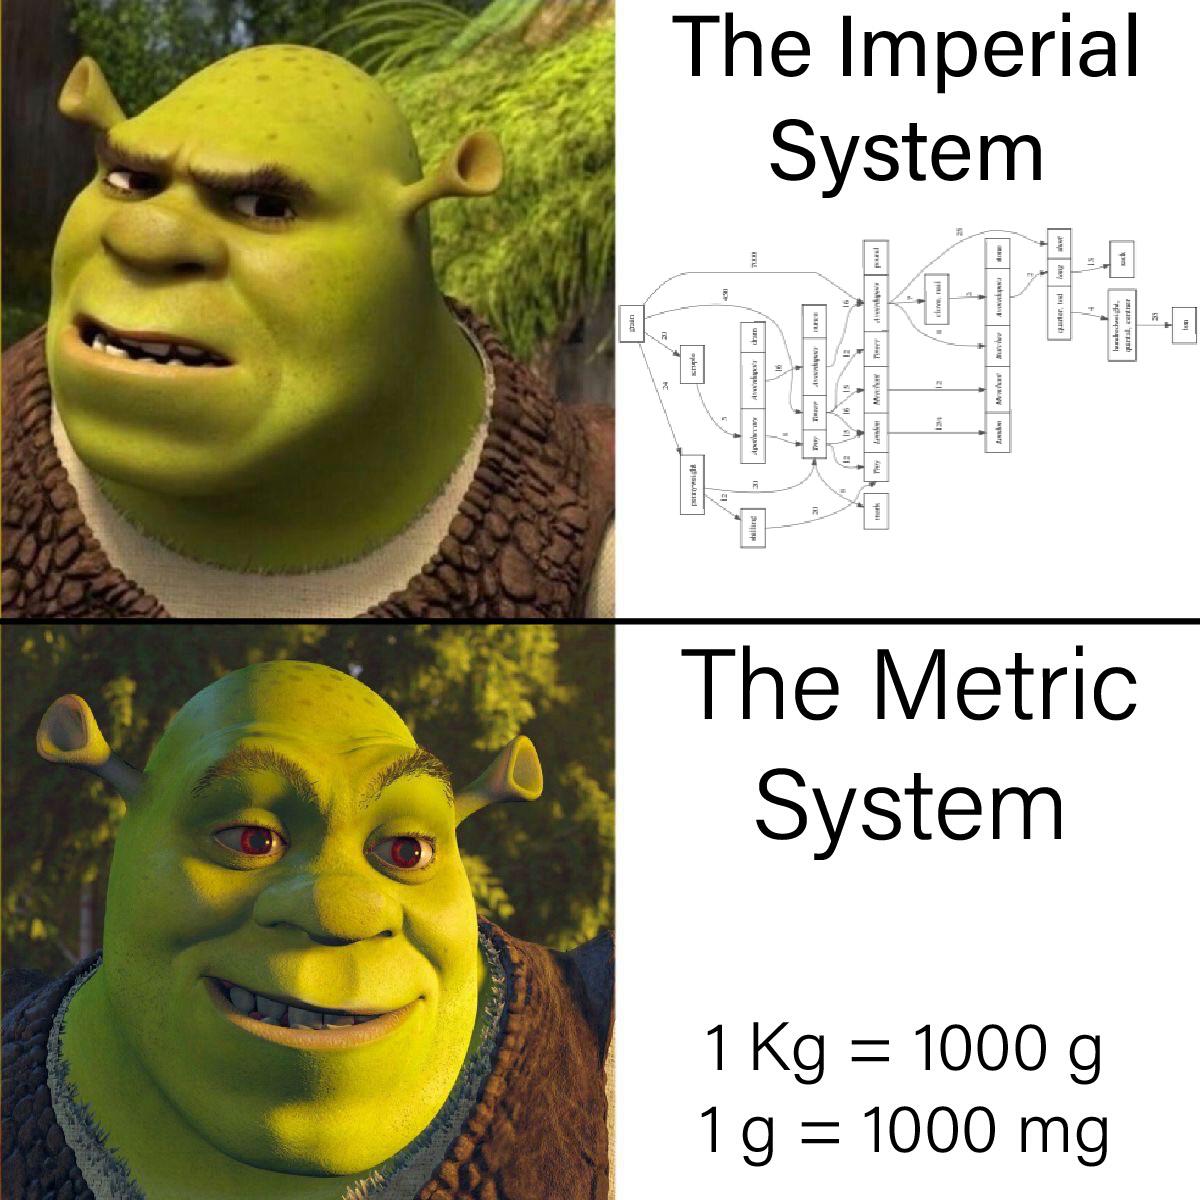 dank memes - shrek meme template - The Imperial System 1 us | All Meryemke Minhales para 1 1 The Metric System 1 kg 1000 g 1g 1000 mg